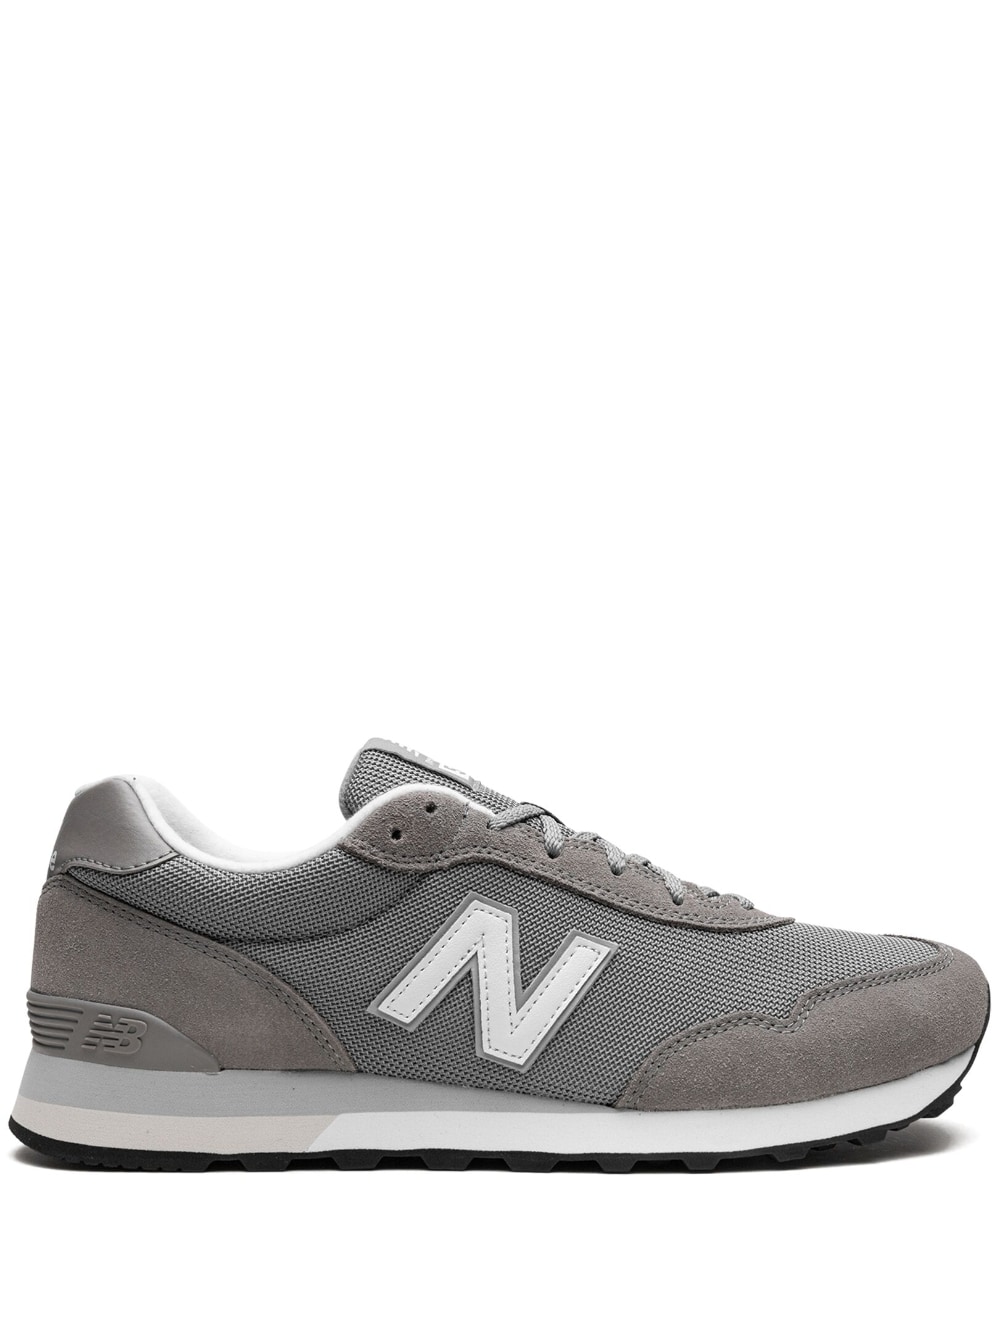 New Balance 515 "Grey/White" sneakers